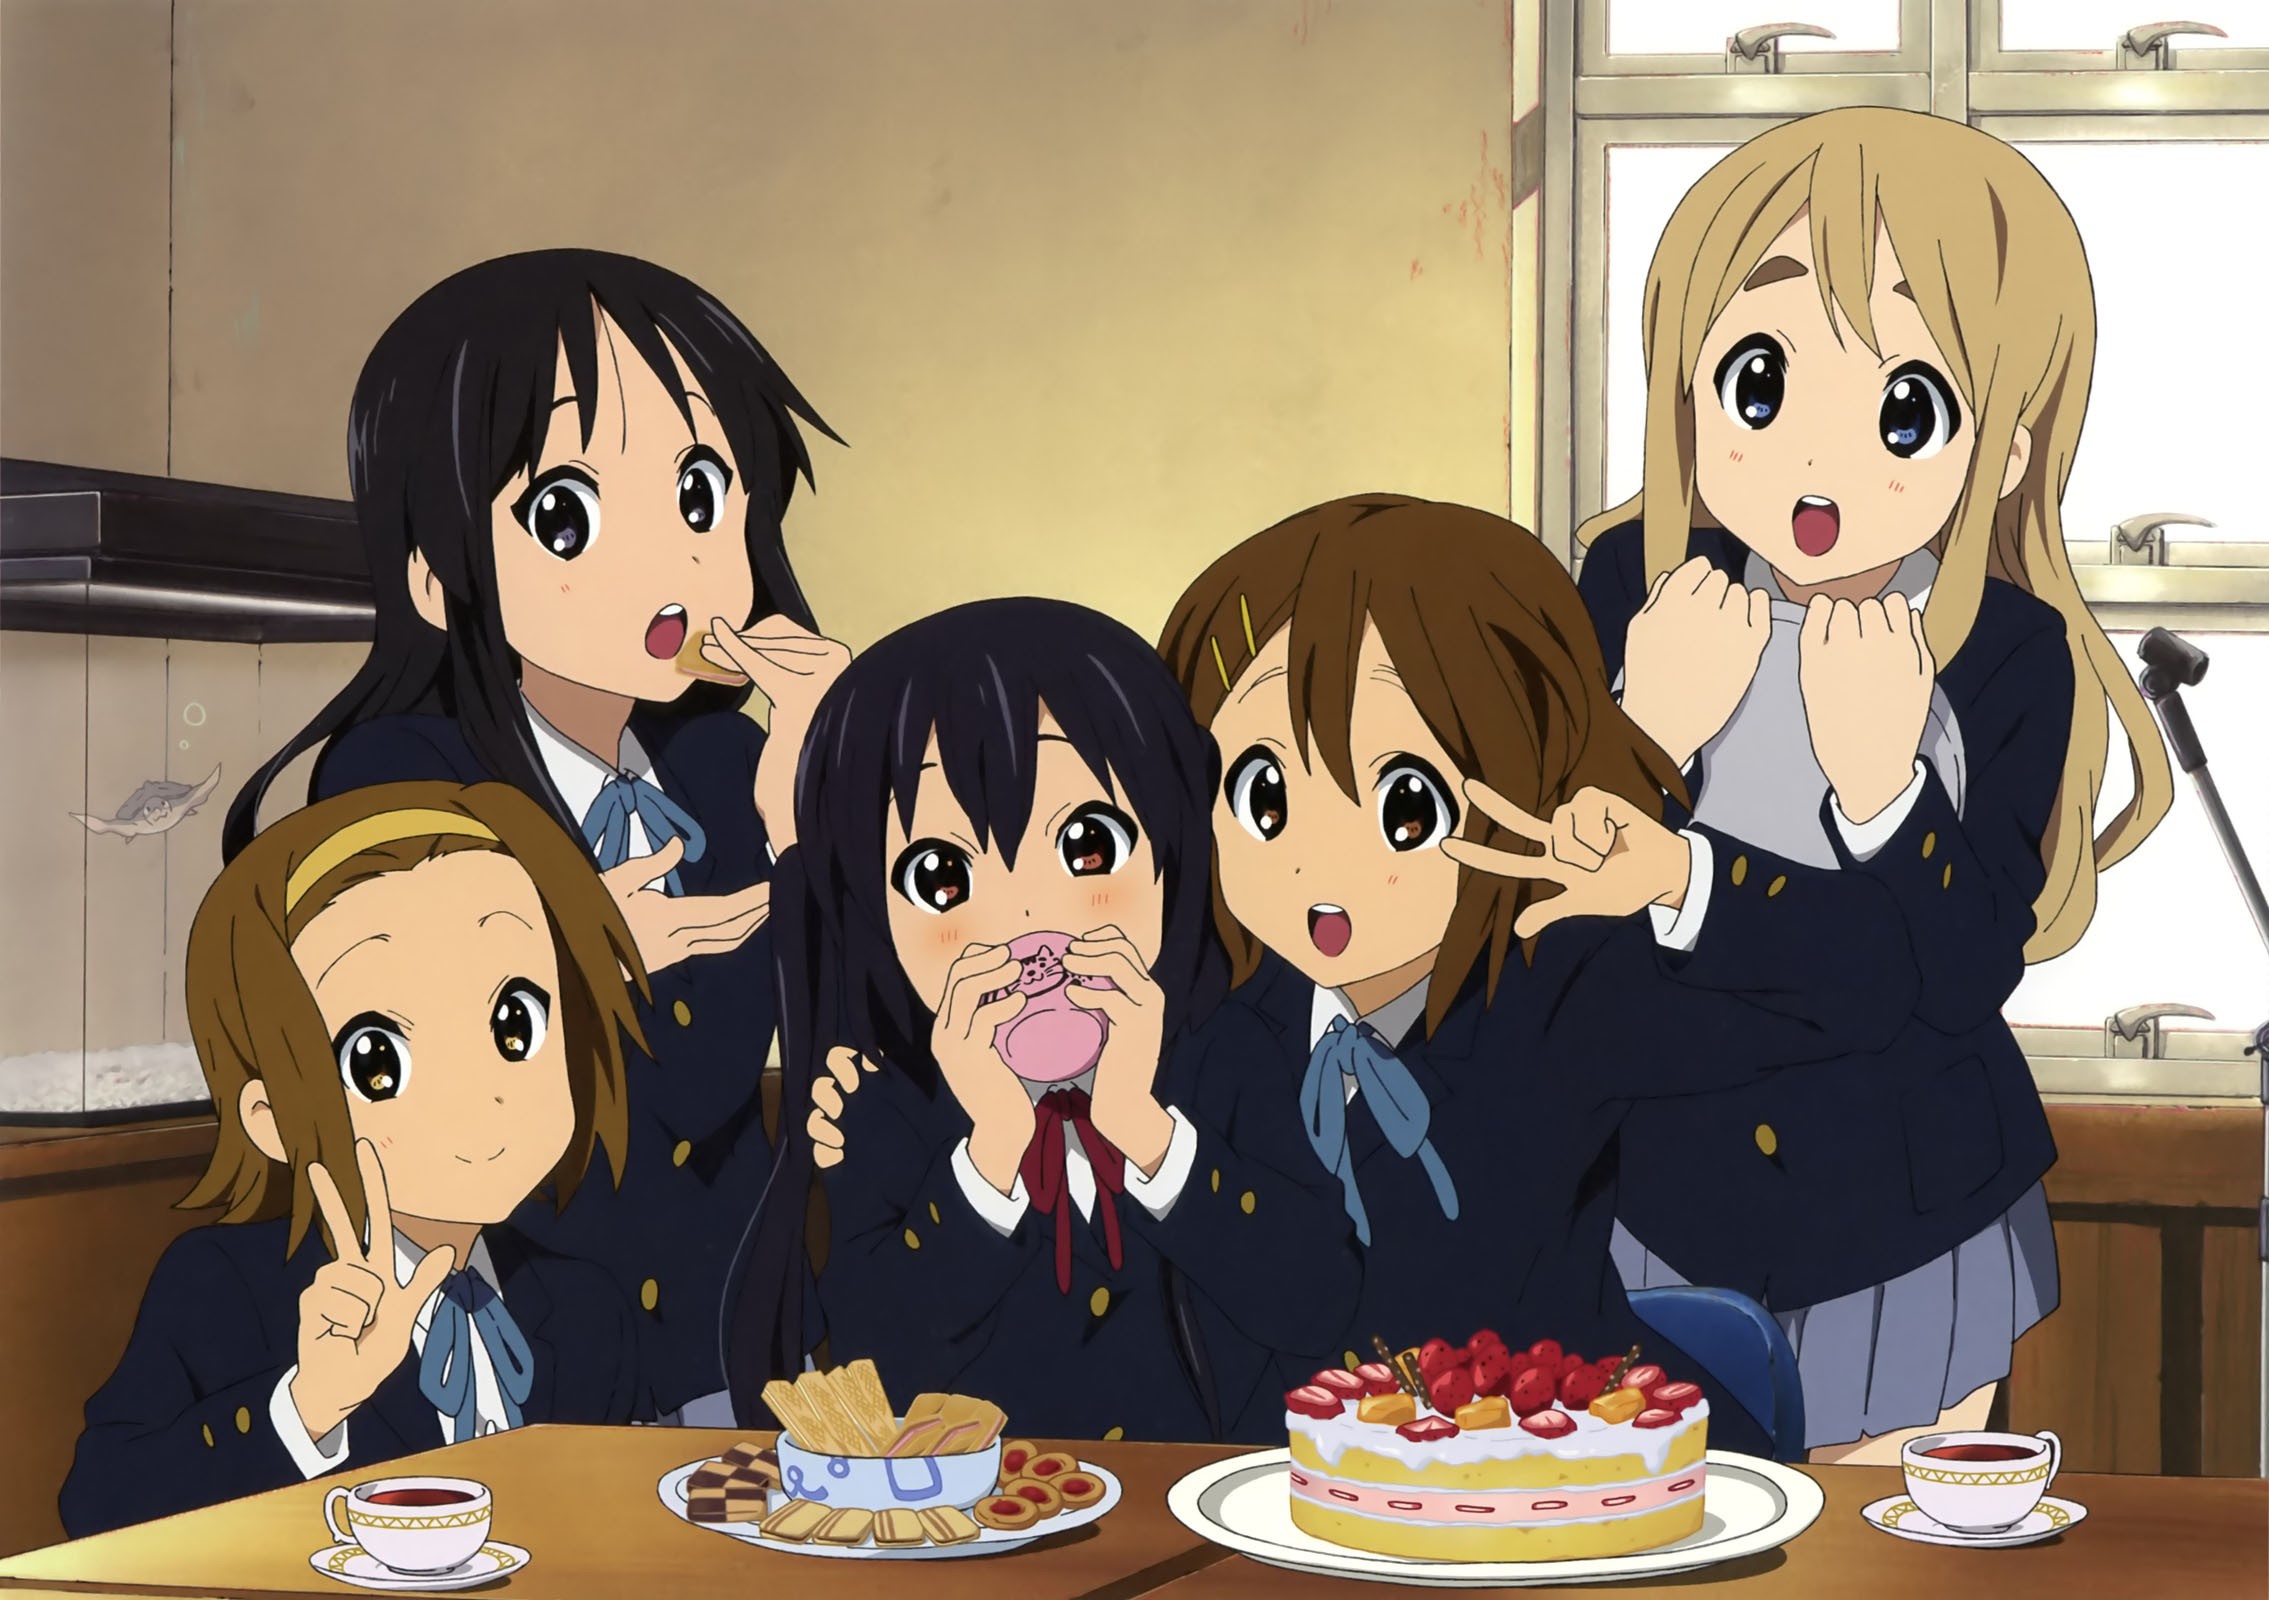 Anime 2269x1600 Hirasawa Yui anime girls anime group of women cake food sweets anime girls eating hand gesture